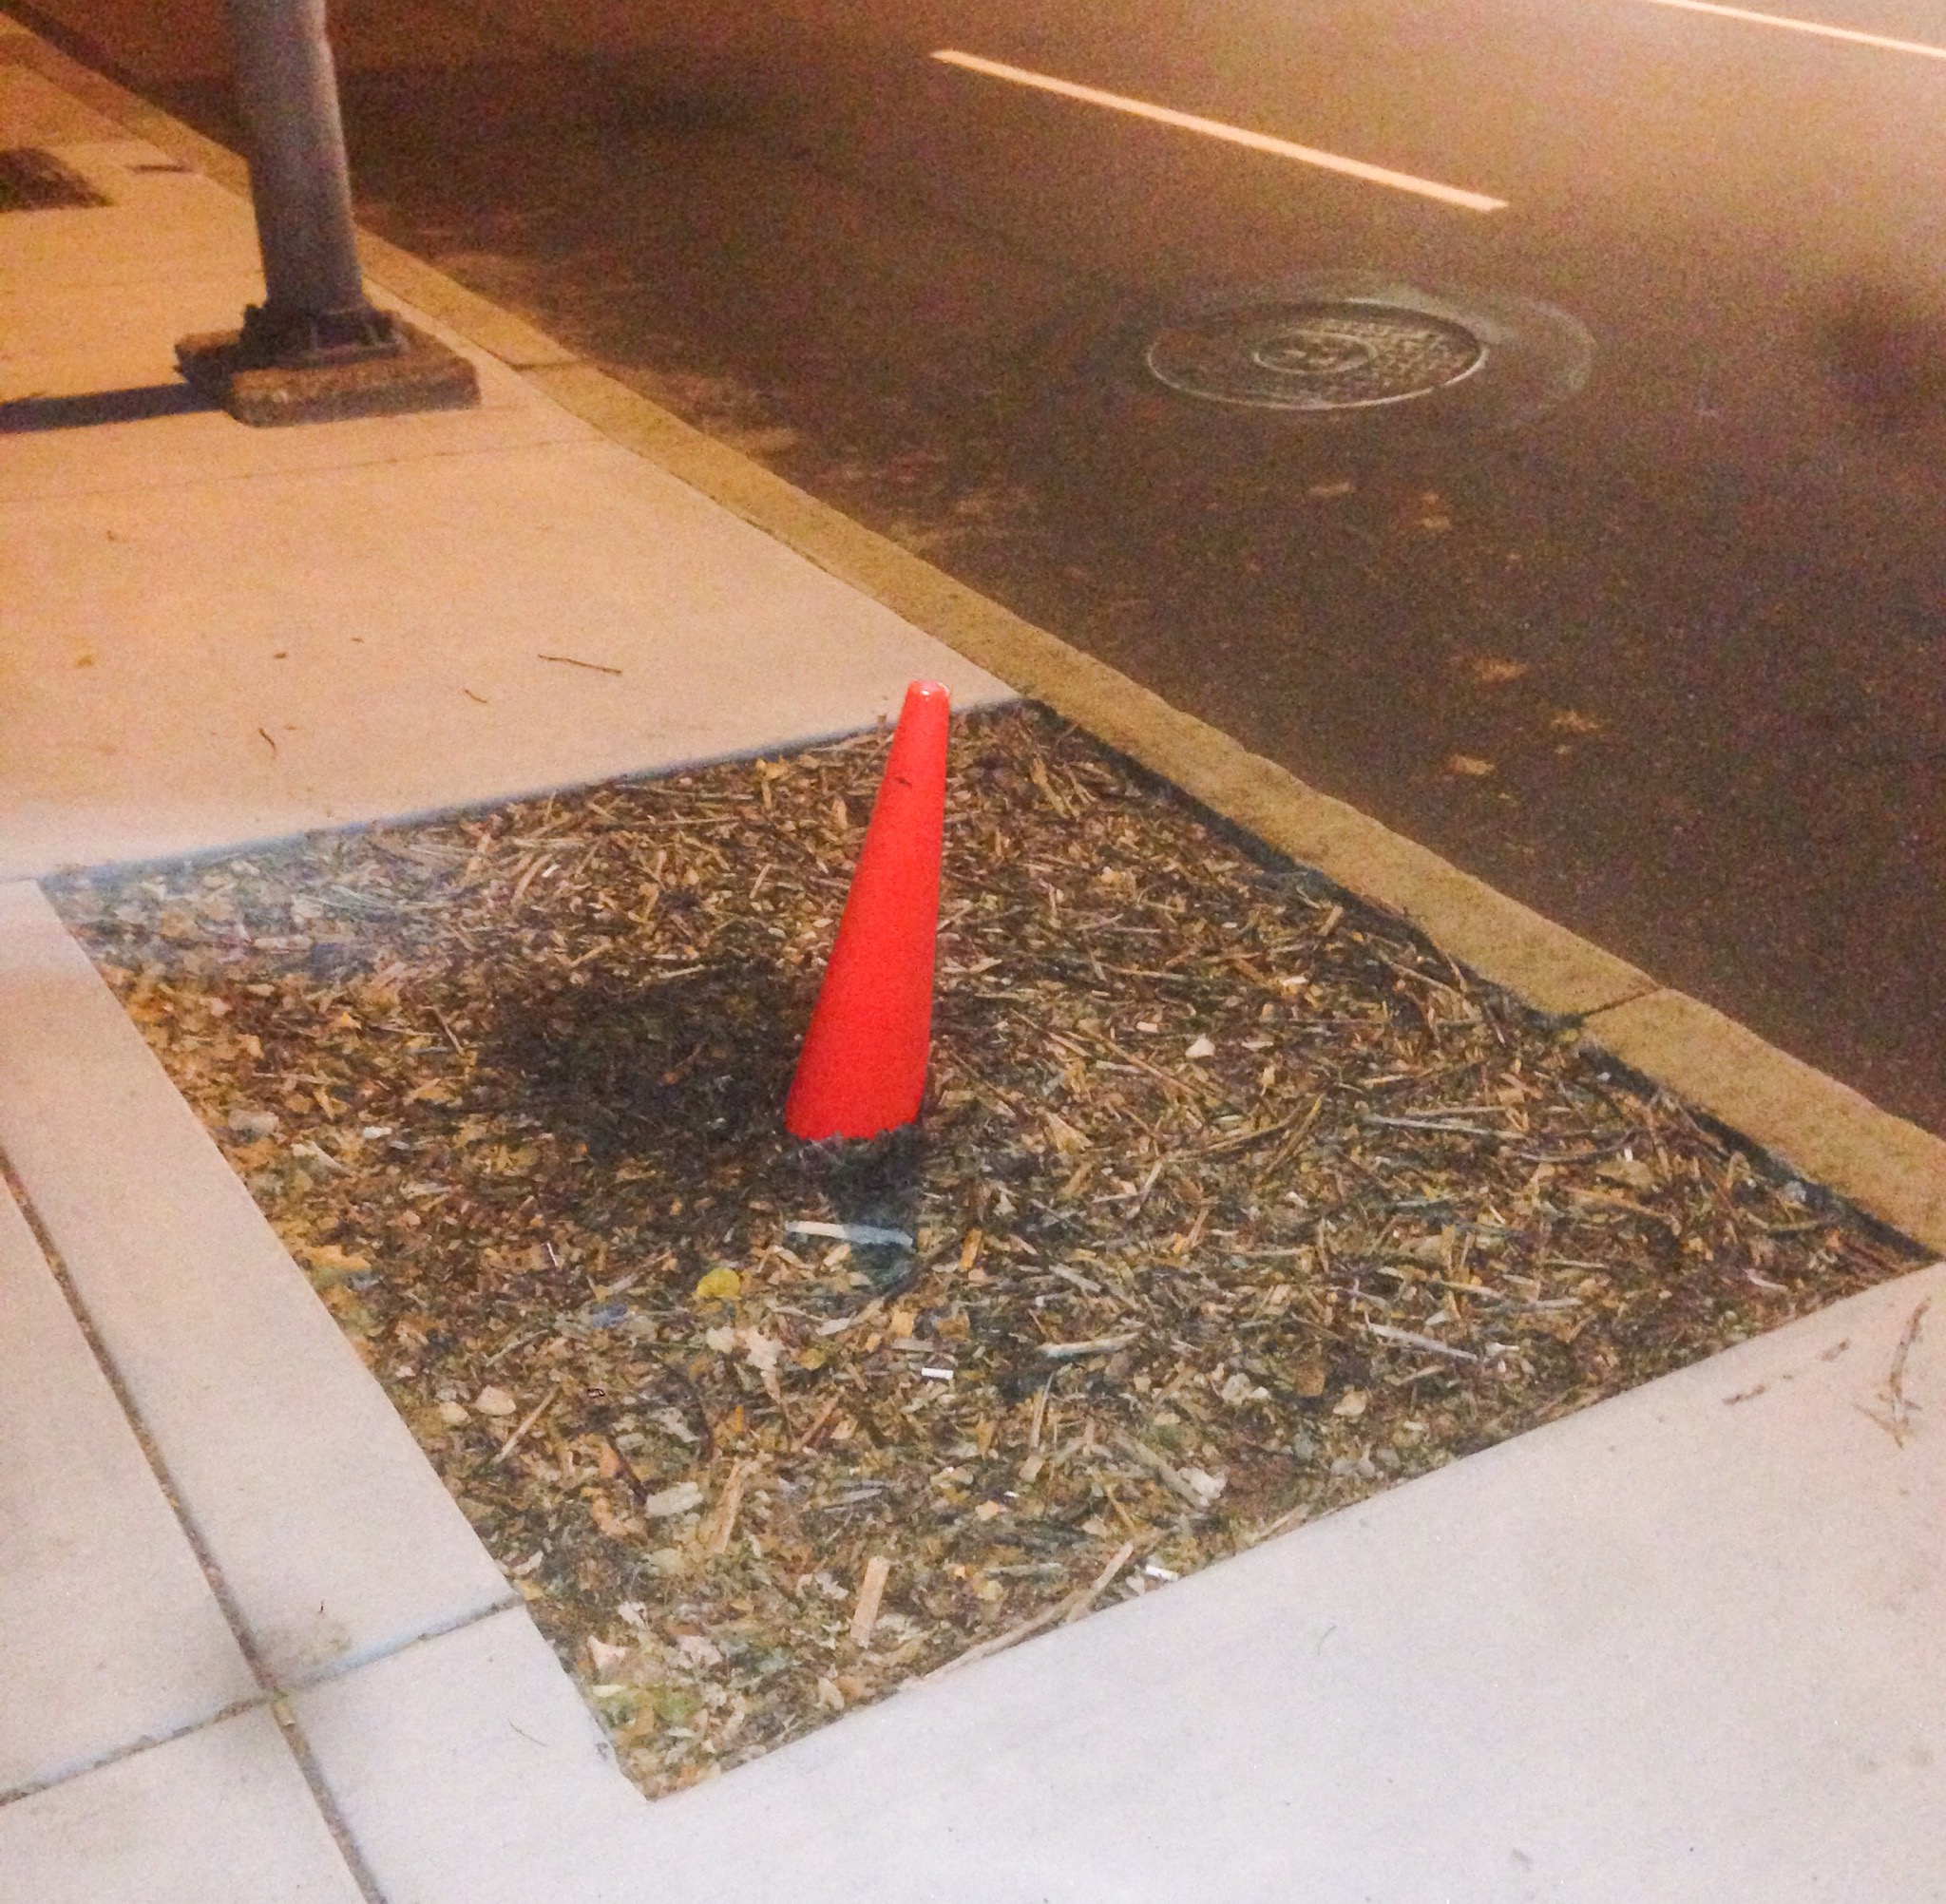 Traffic cone planted